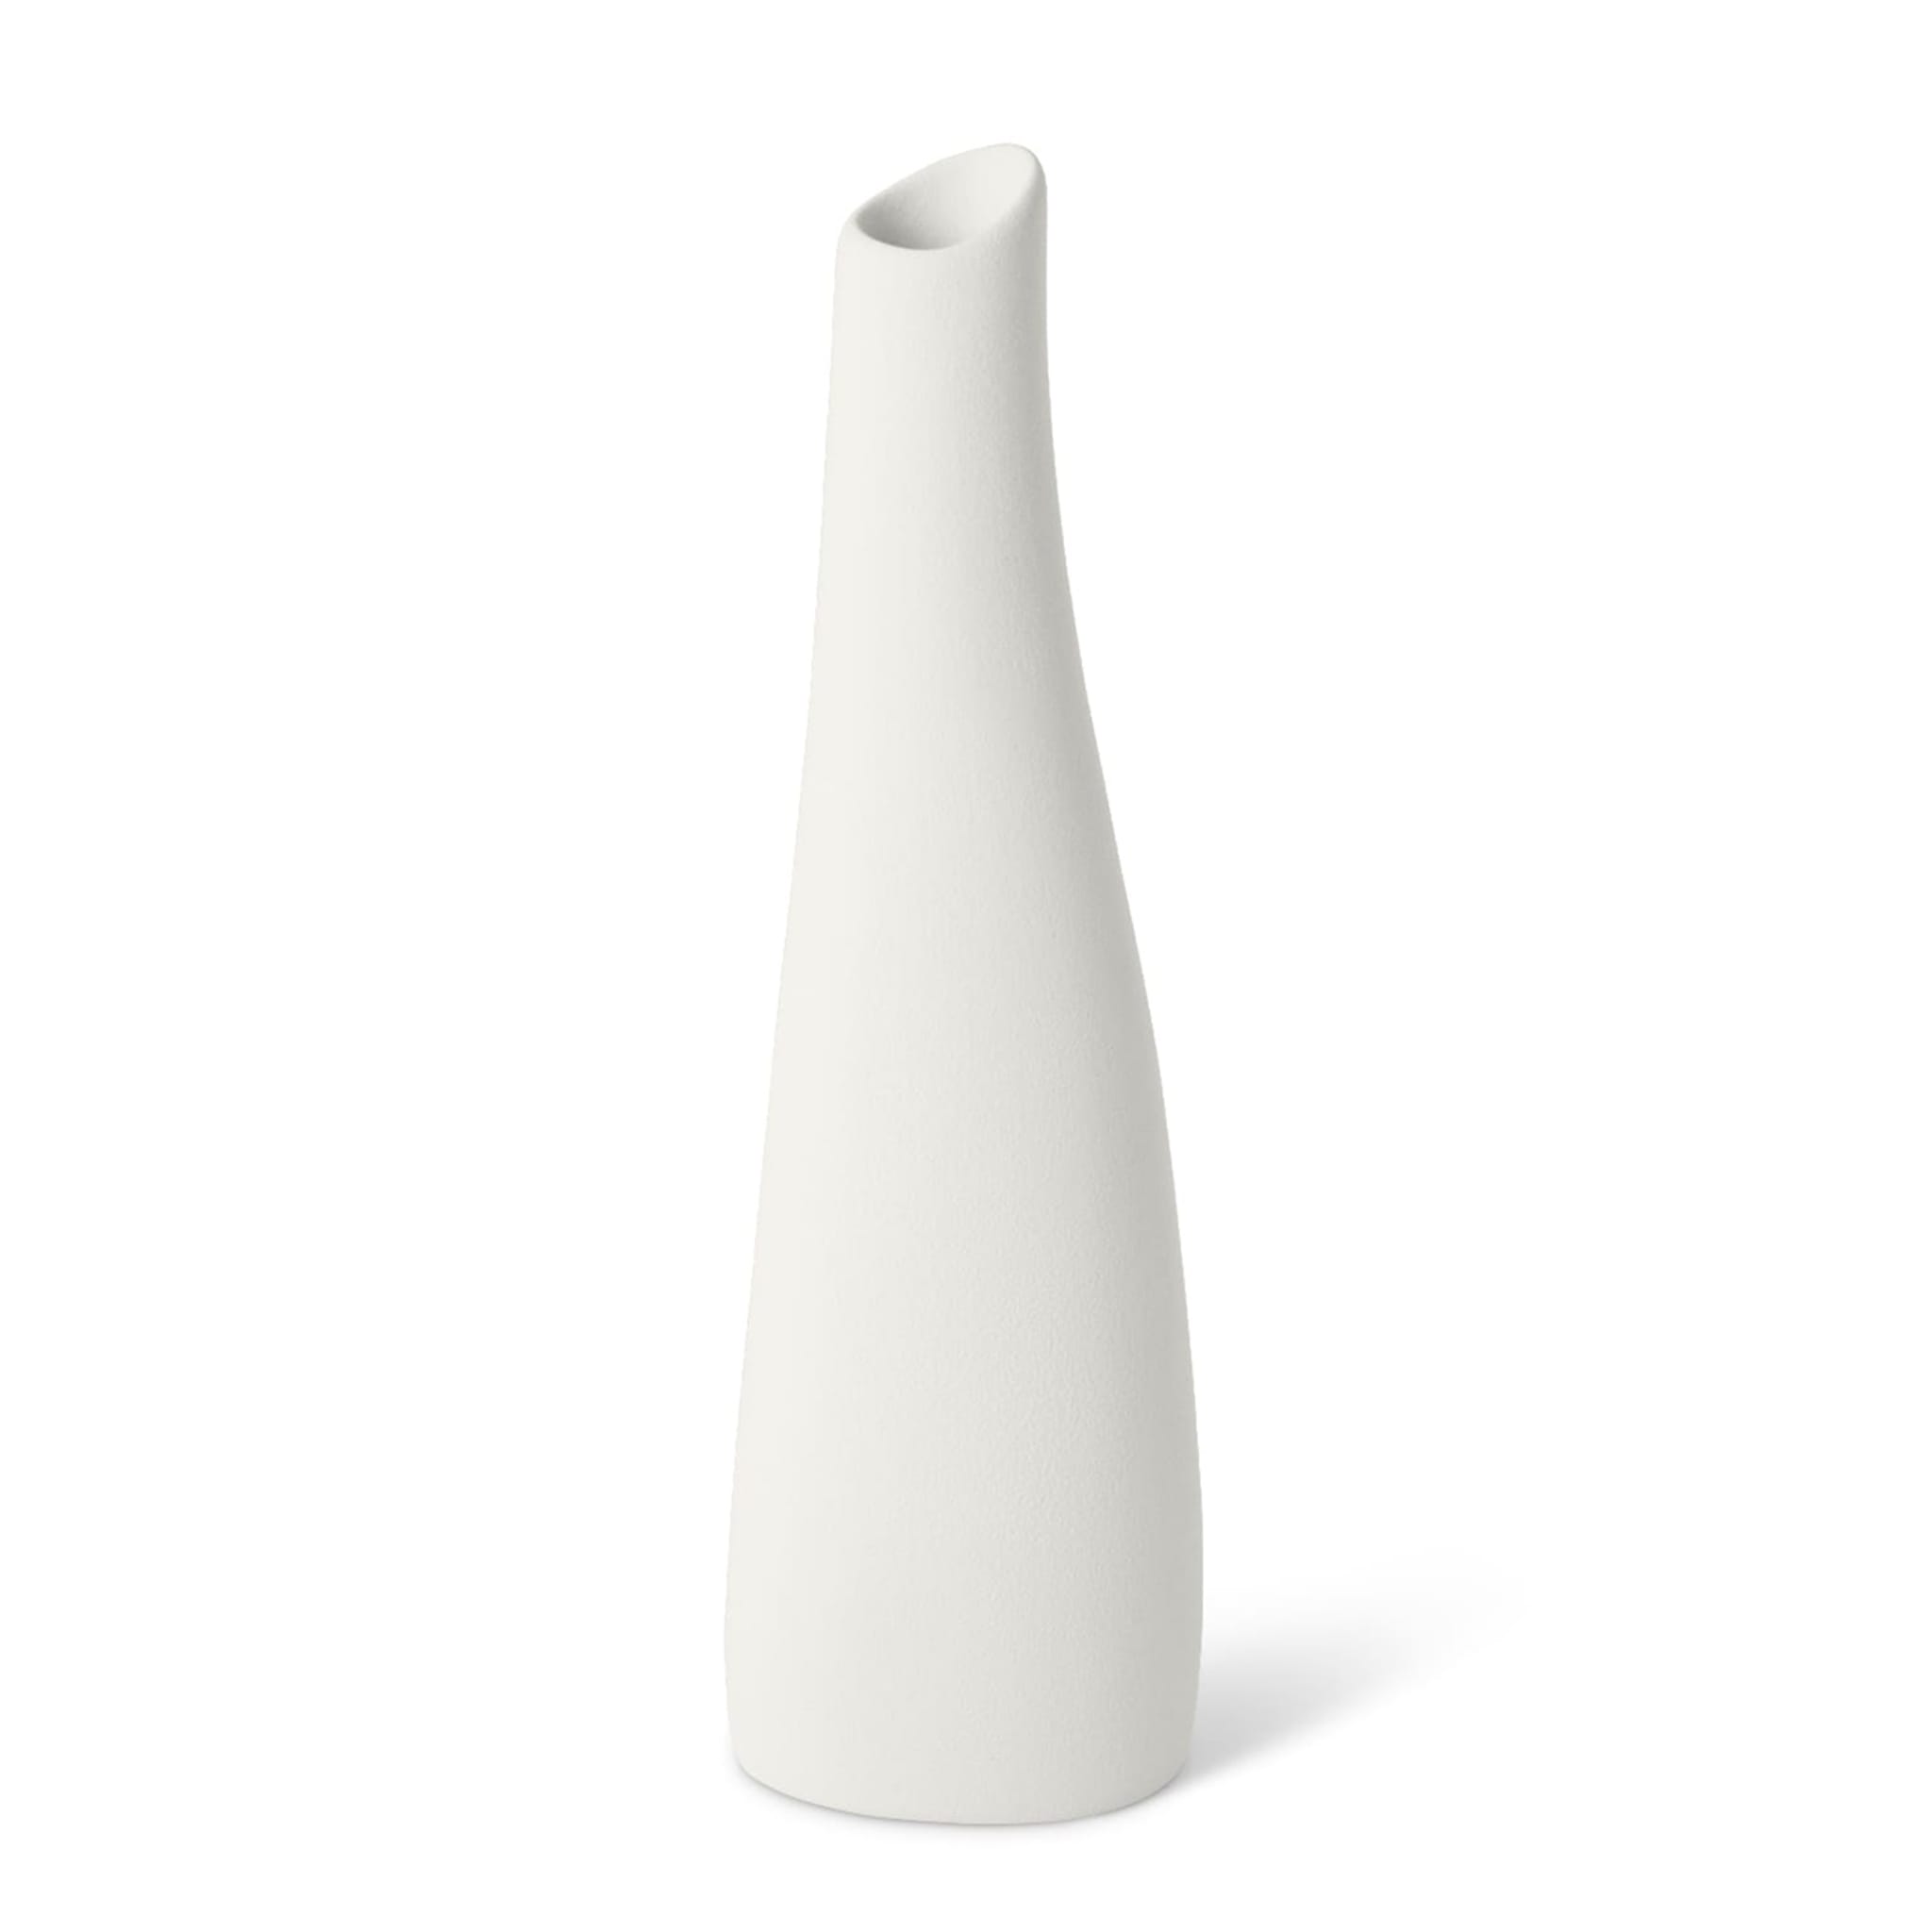 White Bottle vase #2 - Alternative view 1